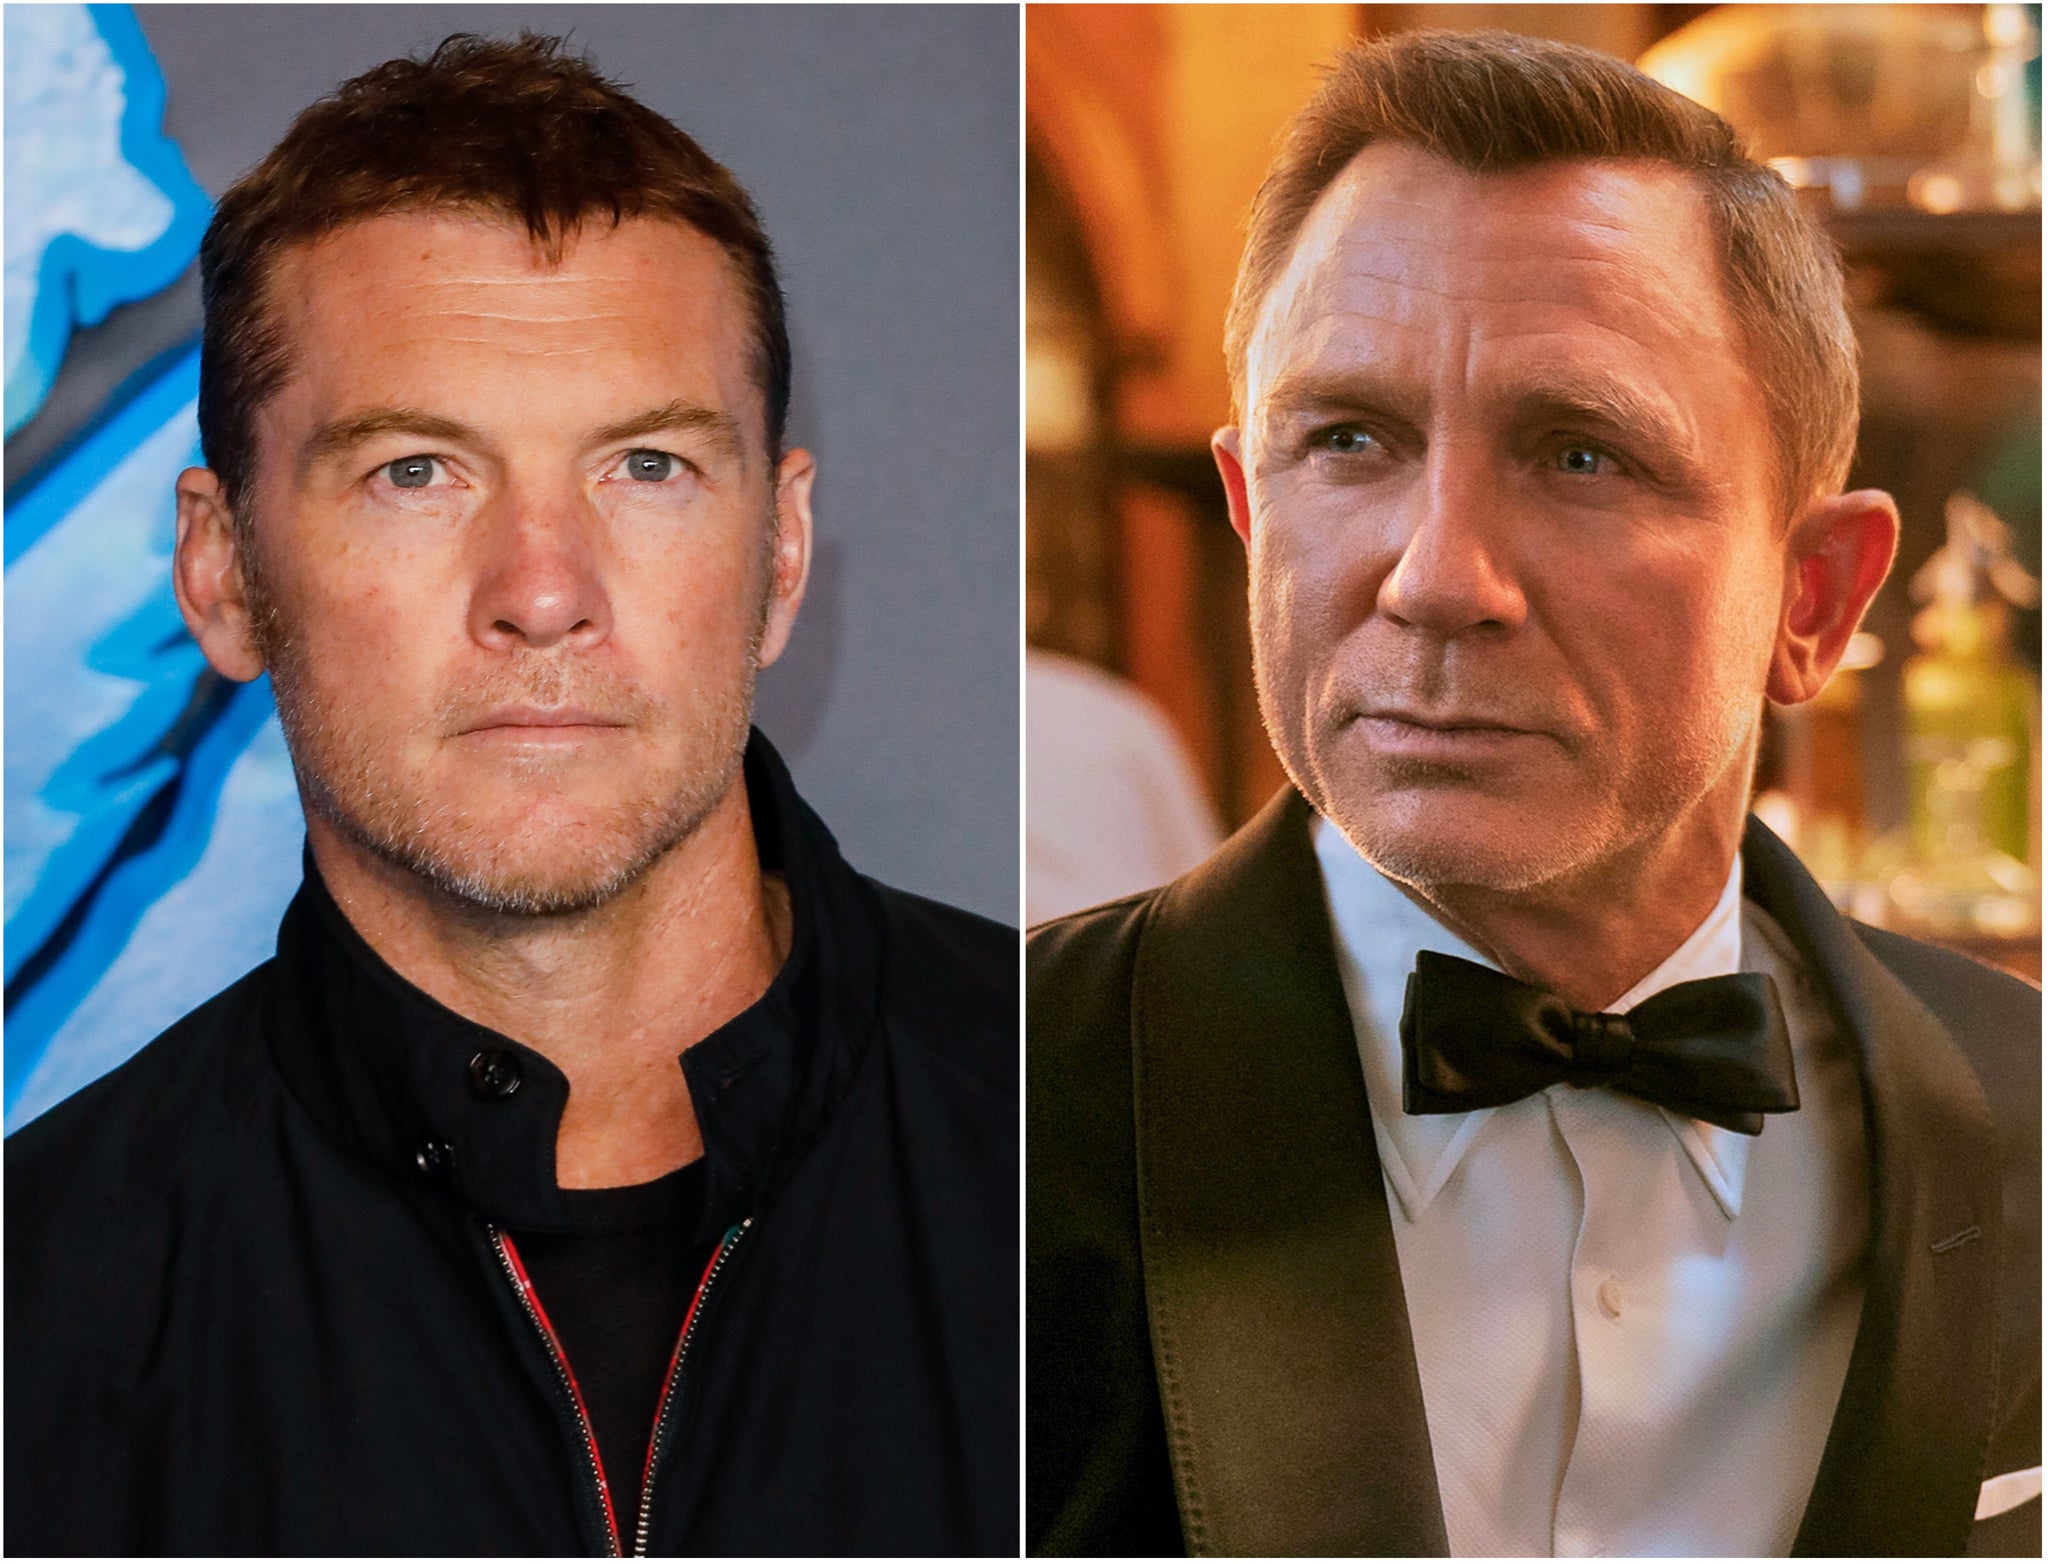 New Bond film 'Skyfall' gets royal world premiere